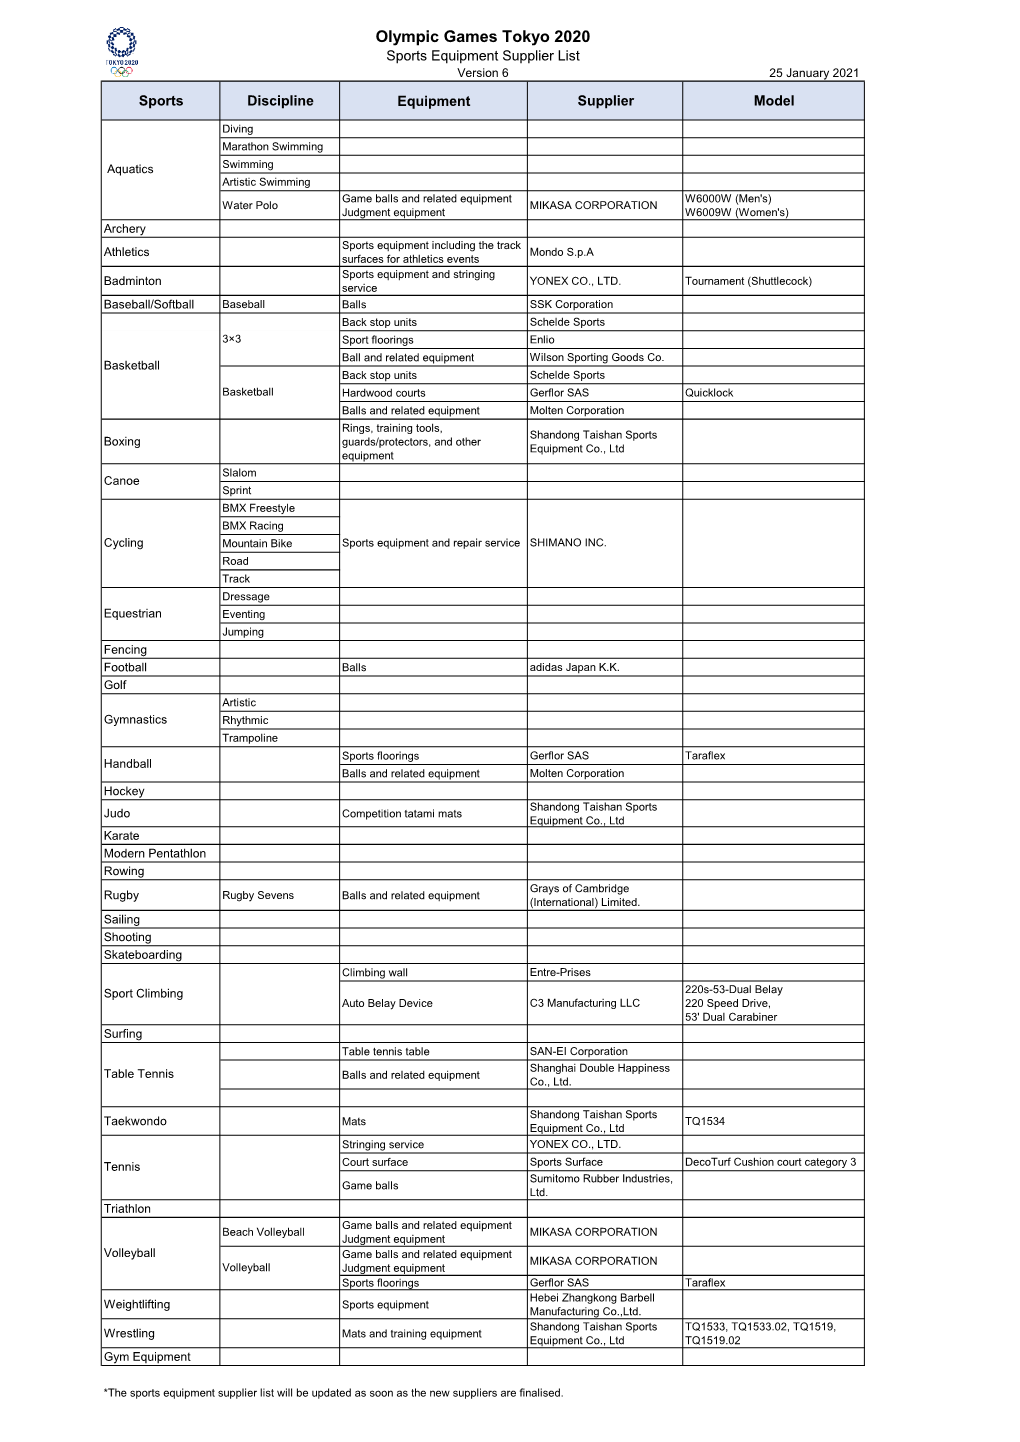 Olympic Equipment List, Jan 2021